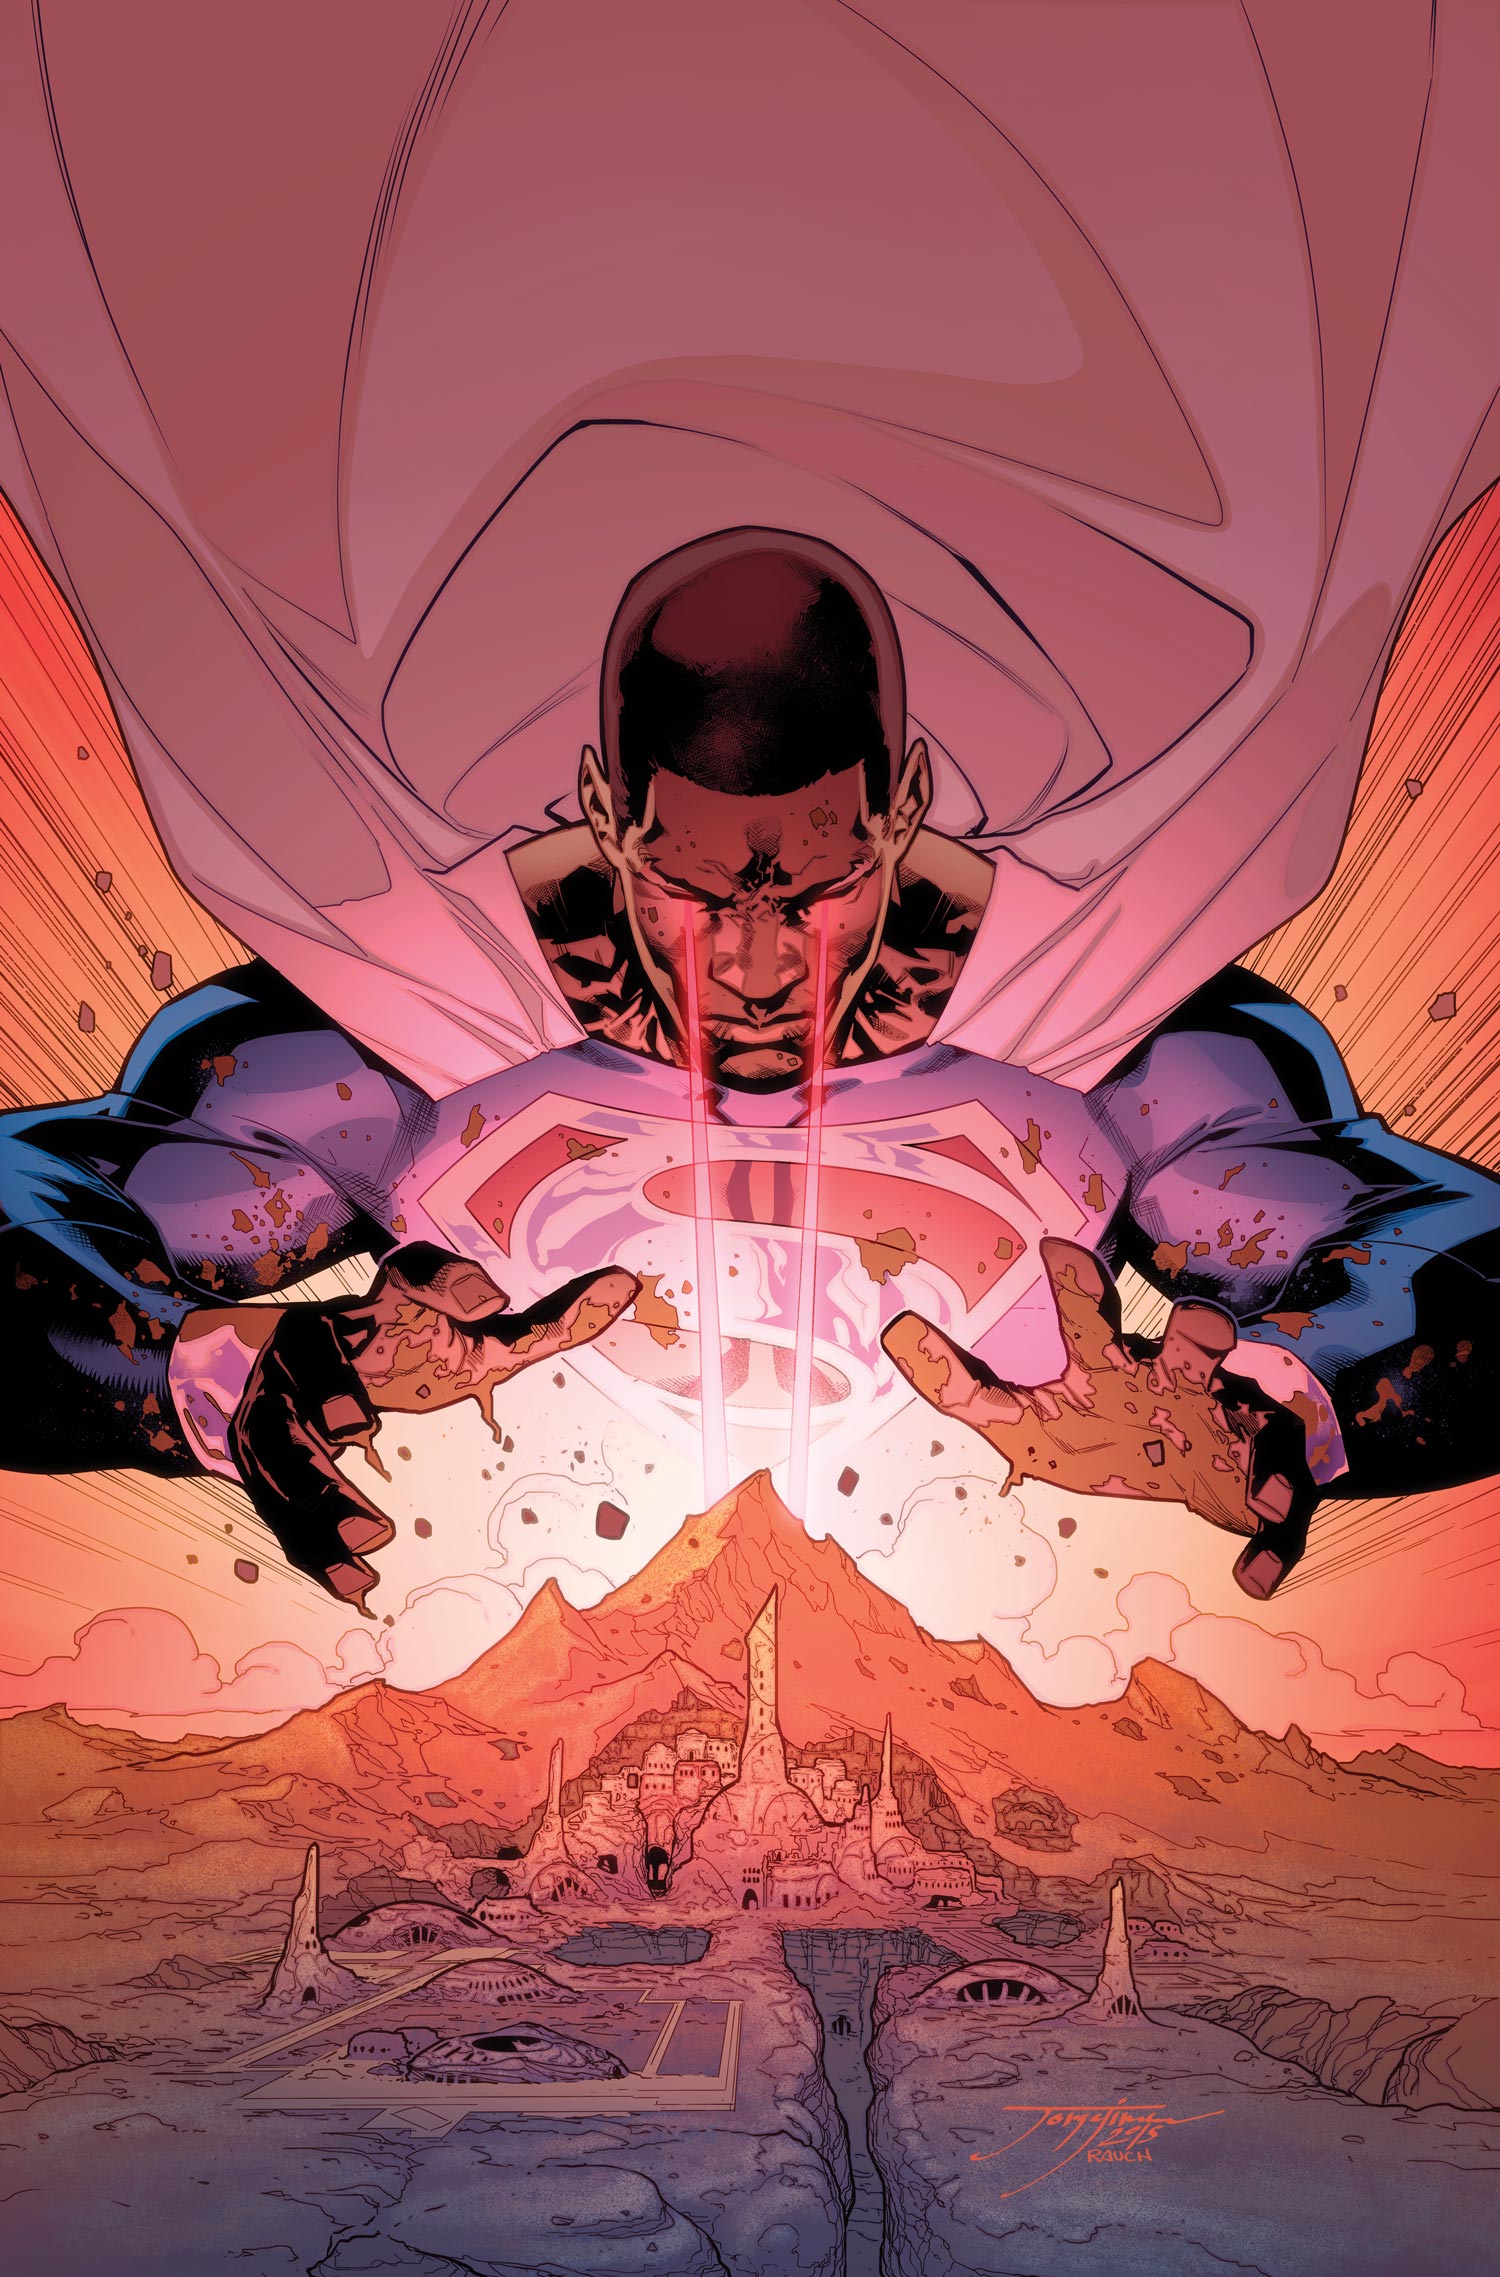 Superman Earth 2 (Val-Zod) by JORGE JIMENEZ  Black superman, Dc comics  superheroes, Val zod